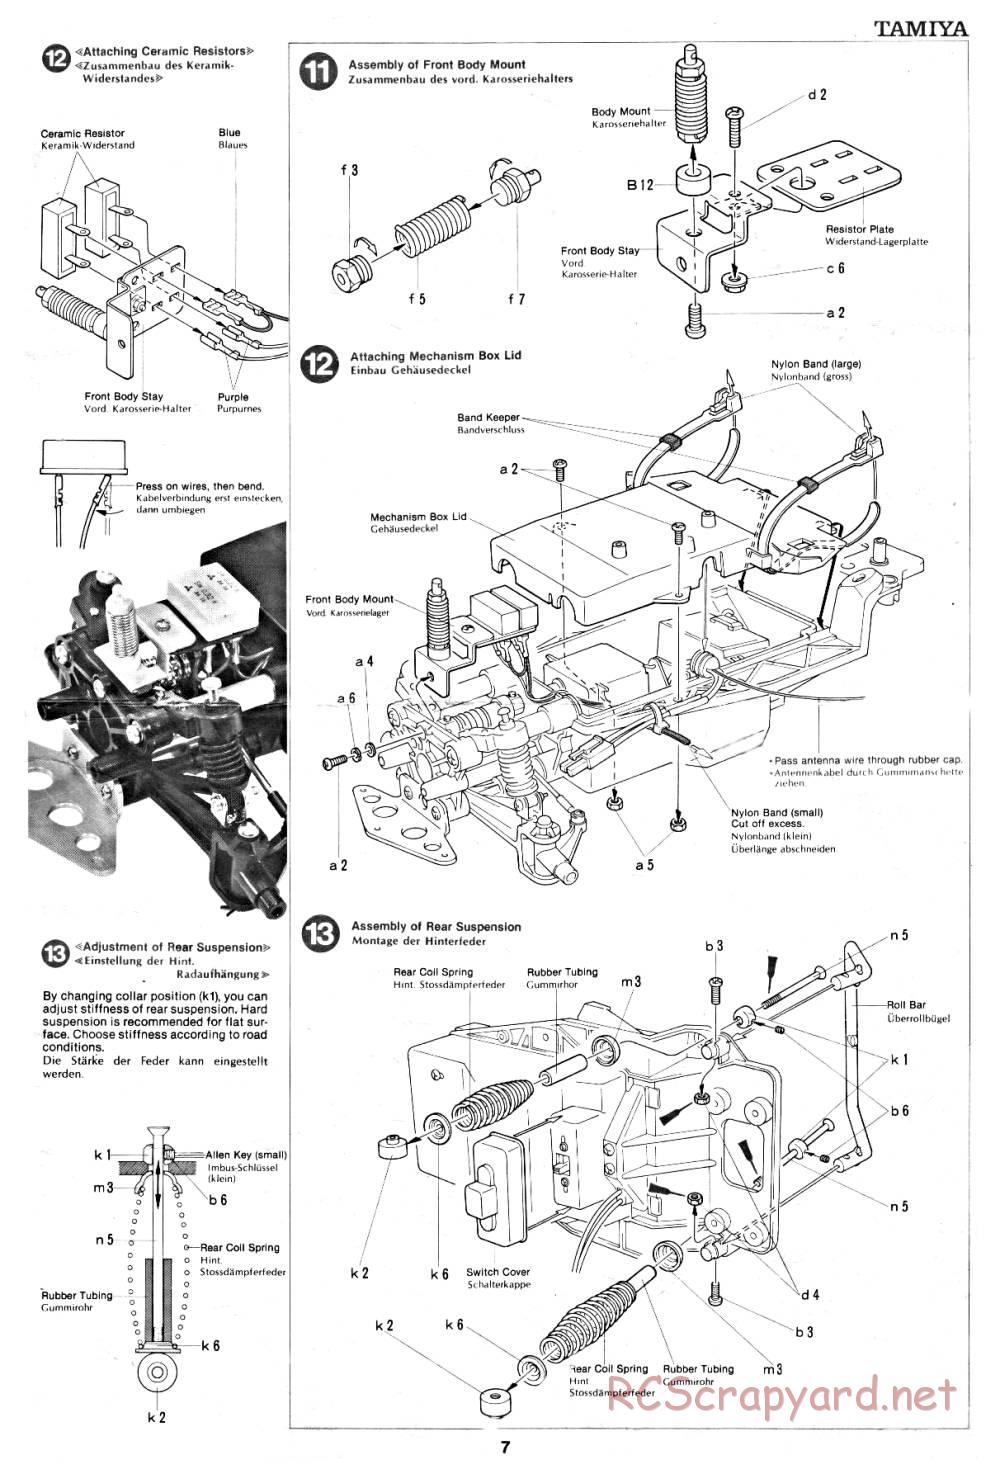 Tamiya - Audi Quattro Rally - 58036 - Manual - Page 7